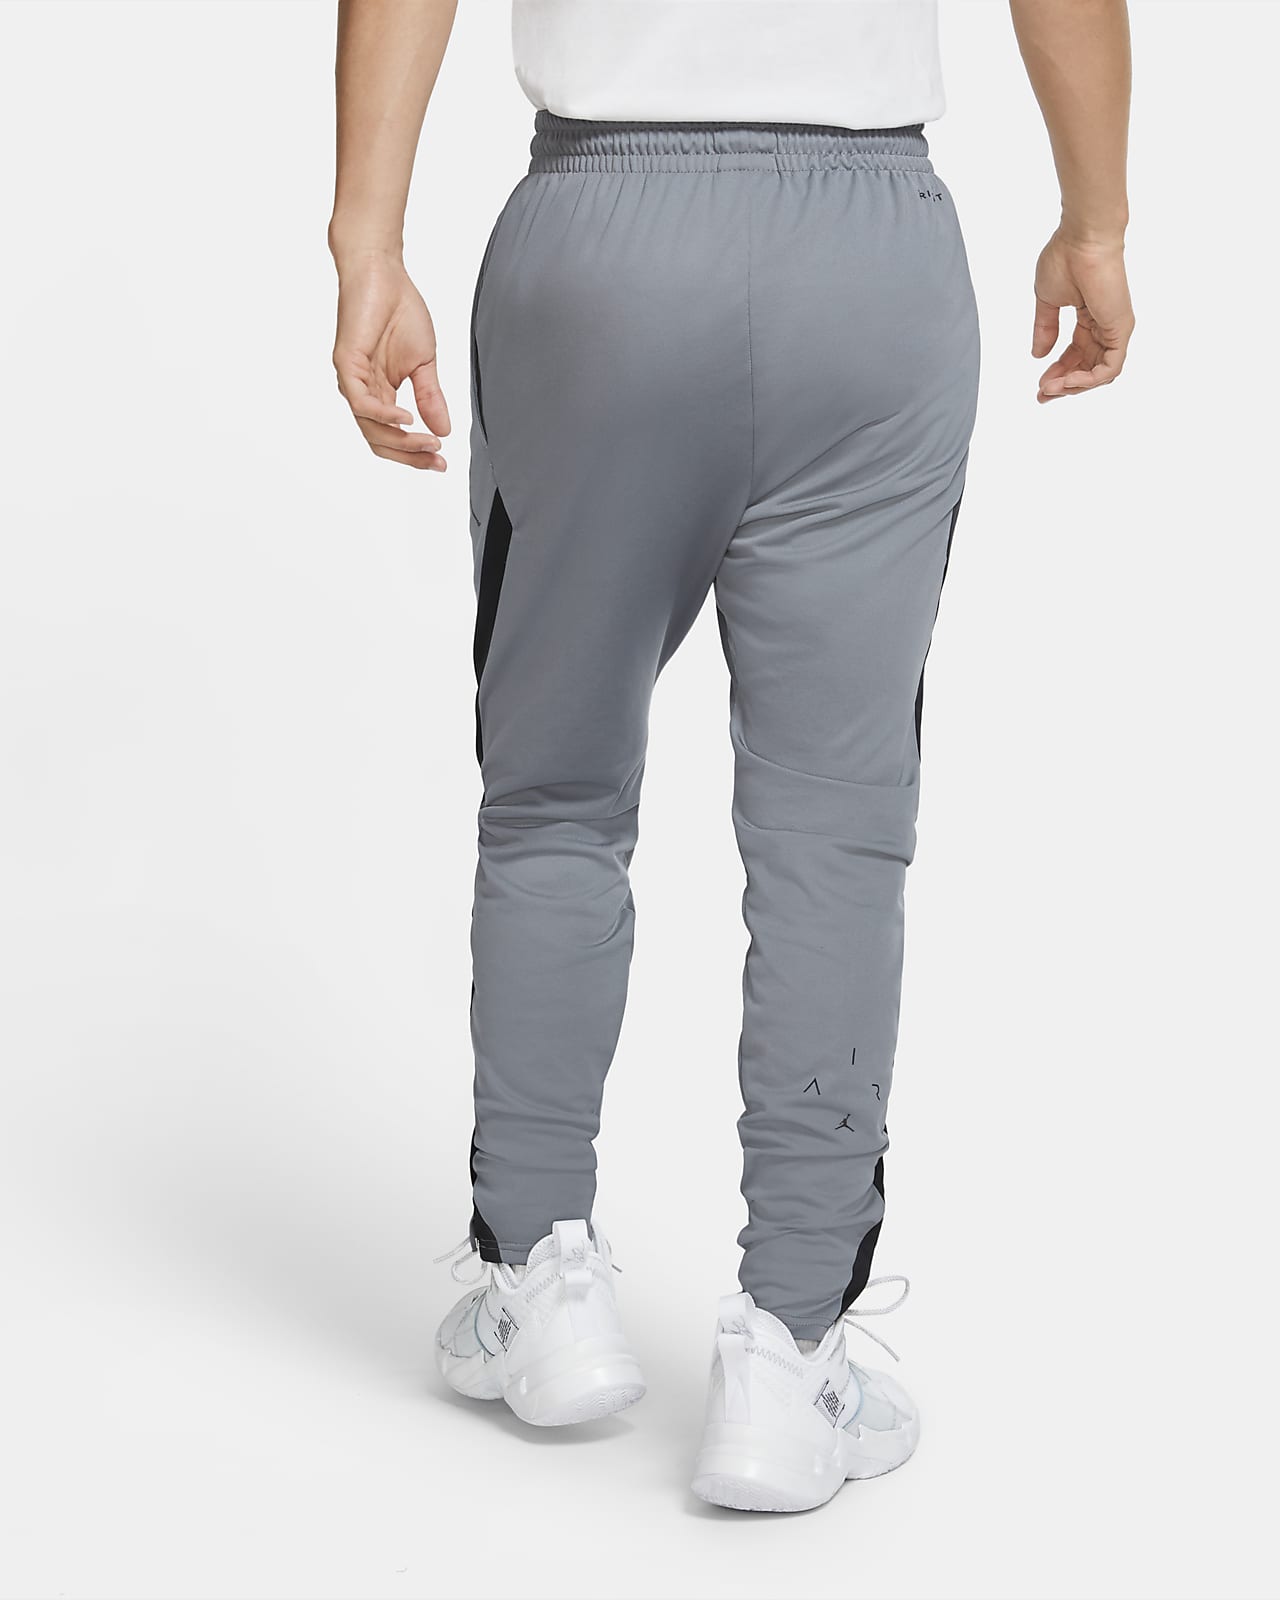 grey jordan pants